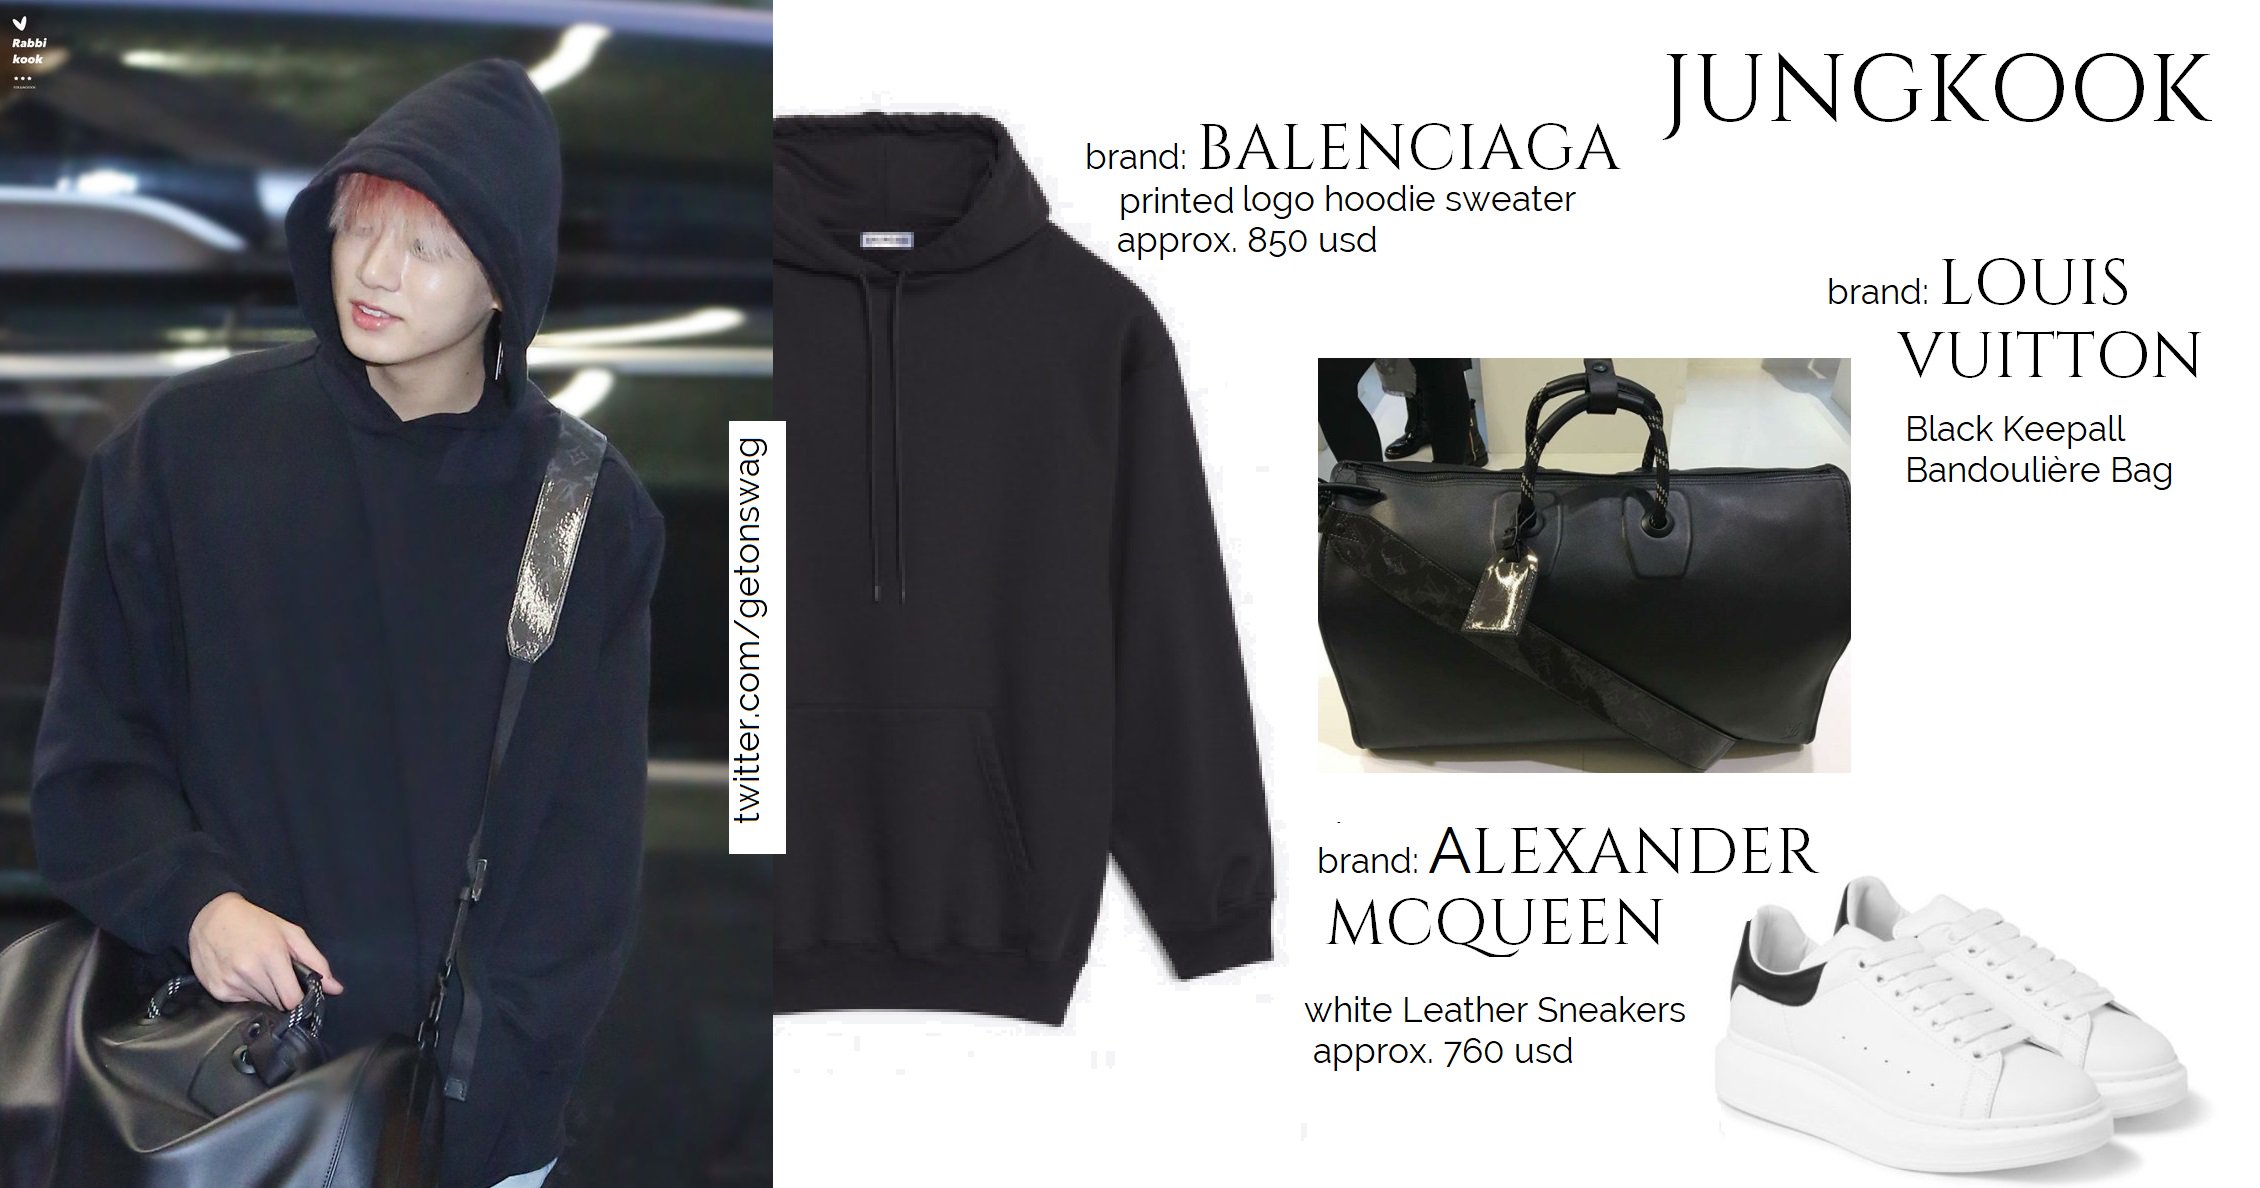 Beyond The Style ✼ Alex ✼ on X: JUNGKOOK #BTS 180903 airport #JUNGKOOK #정국  #방탄소년단 LOUIS VUITTON Black Keepall Bandoulière Bag bd gift 🎁 from #Jimin   / X